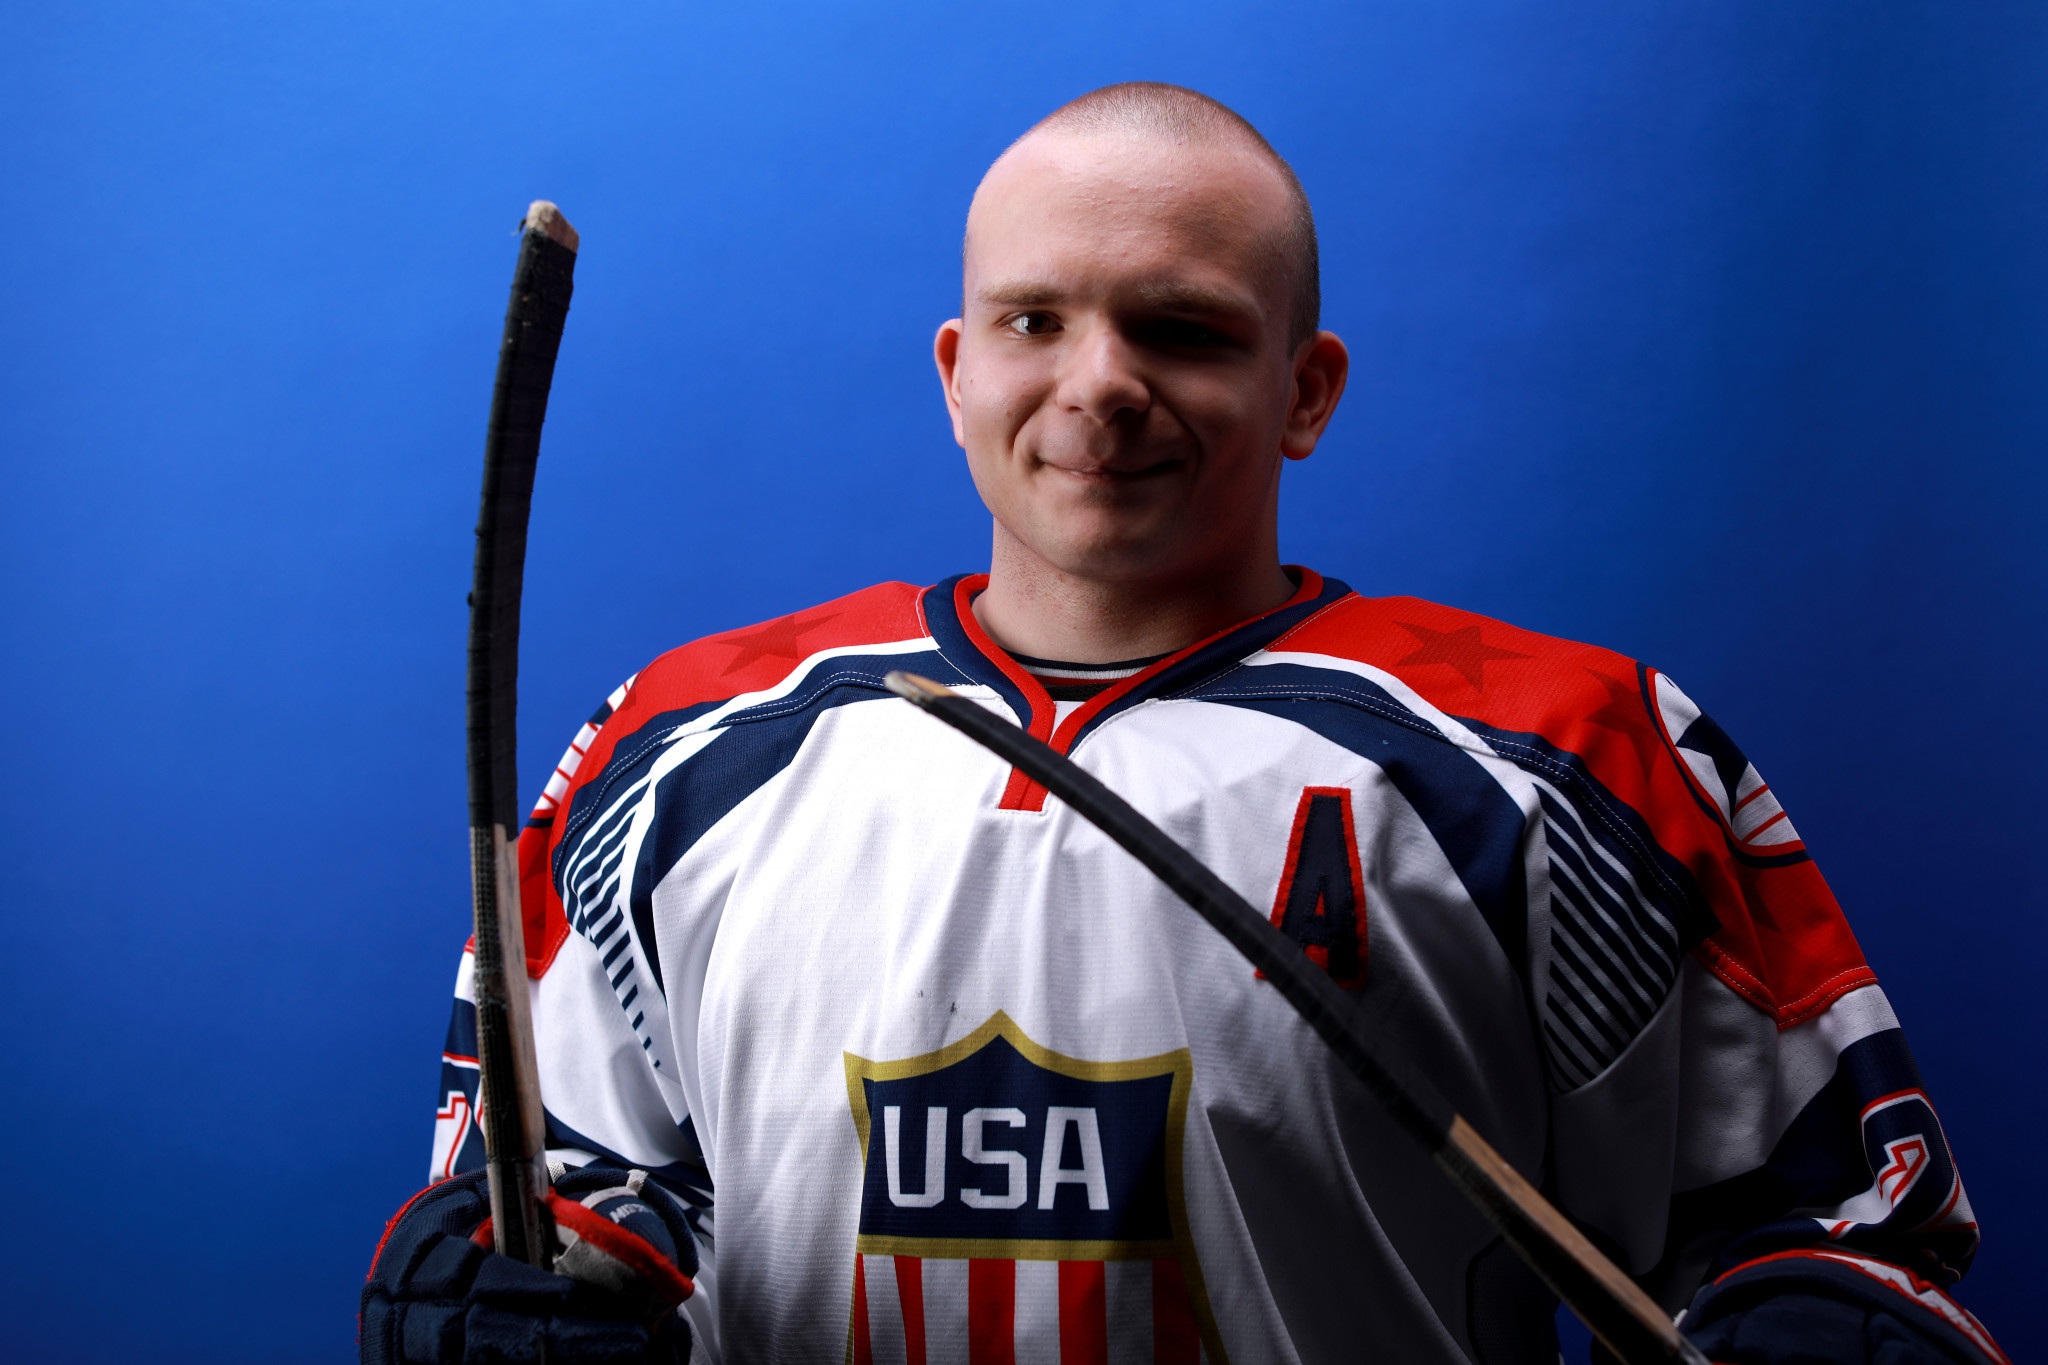 Pauls named US Para-ice hockey team captain for Pyeongchang 2018